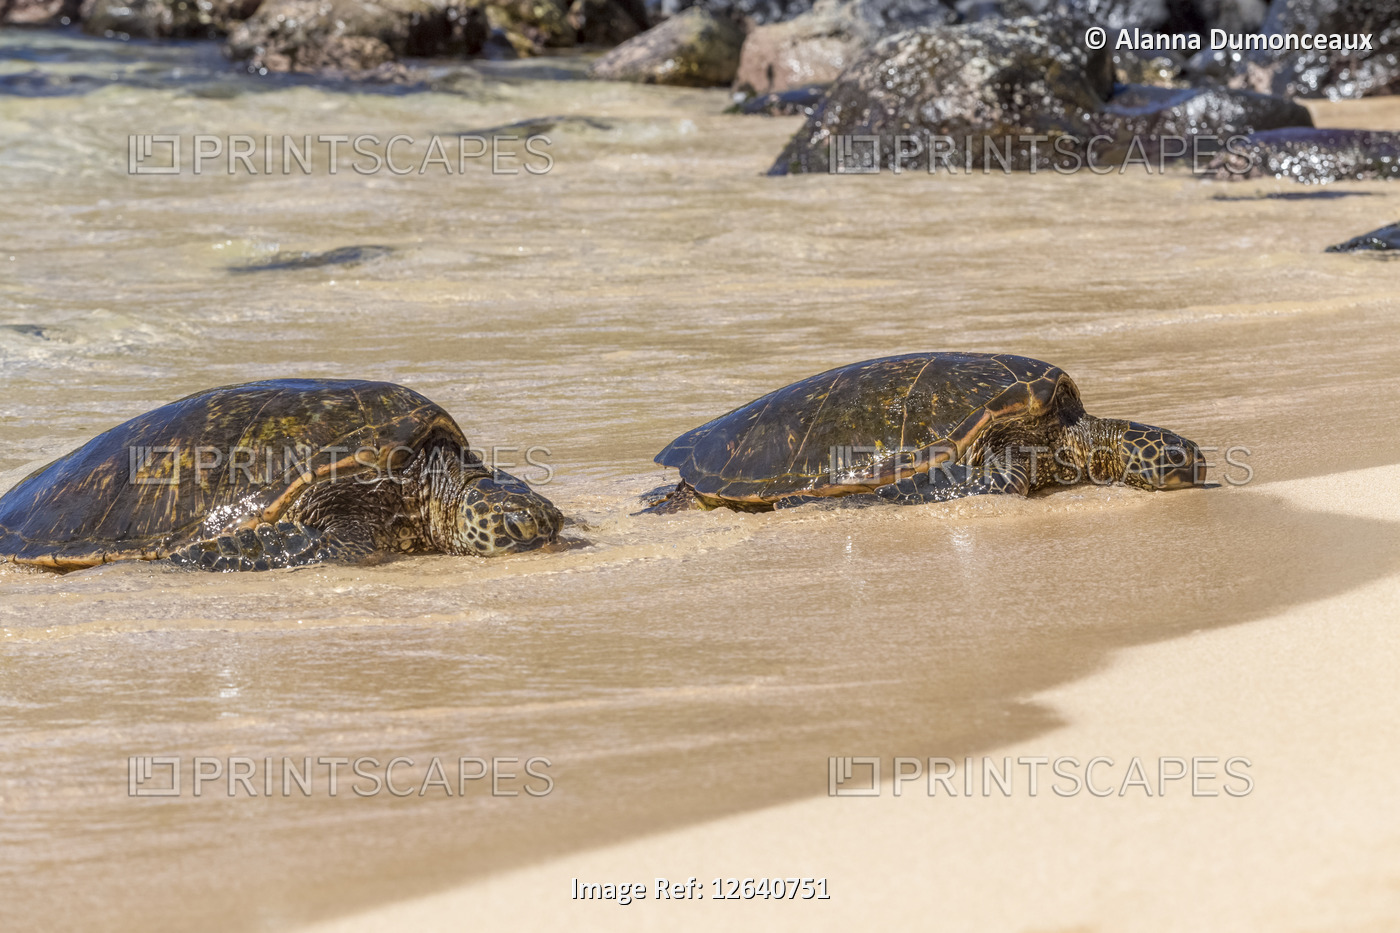 Endangered Green sea turtles (Chelonia mydas) emerge from the surf to sunbathe ...